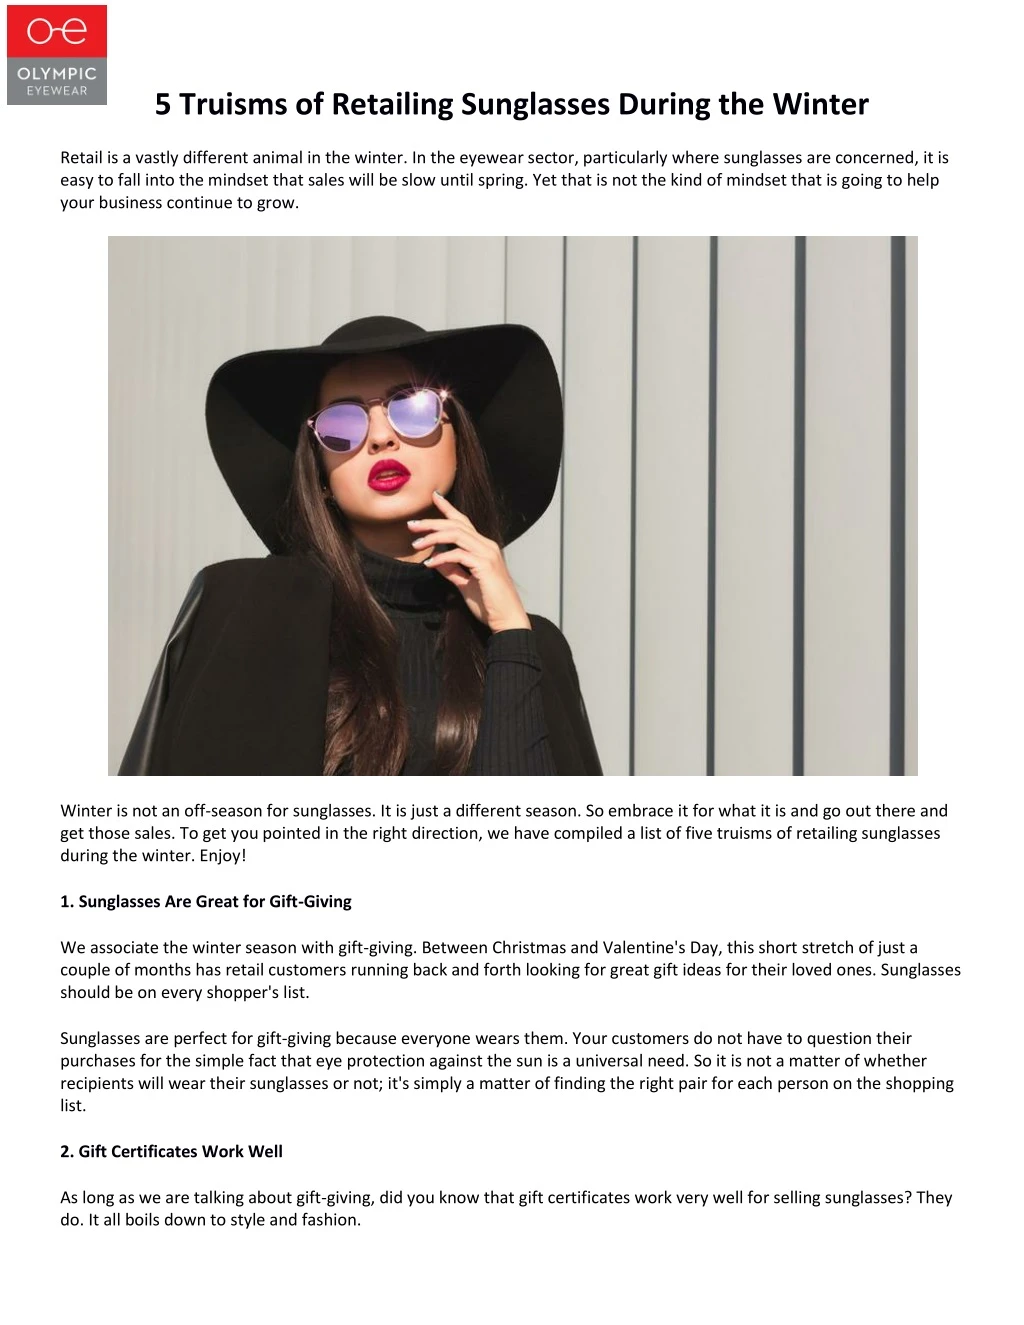 5 truisms of retailing sunglasses during